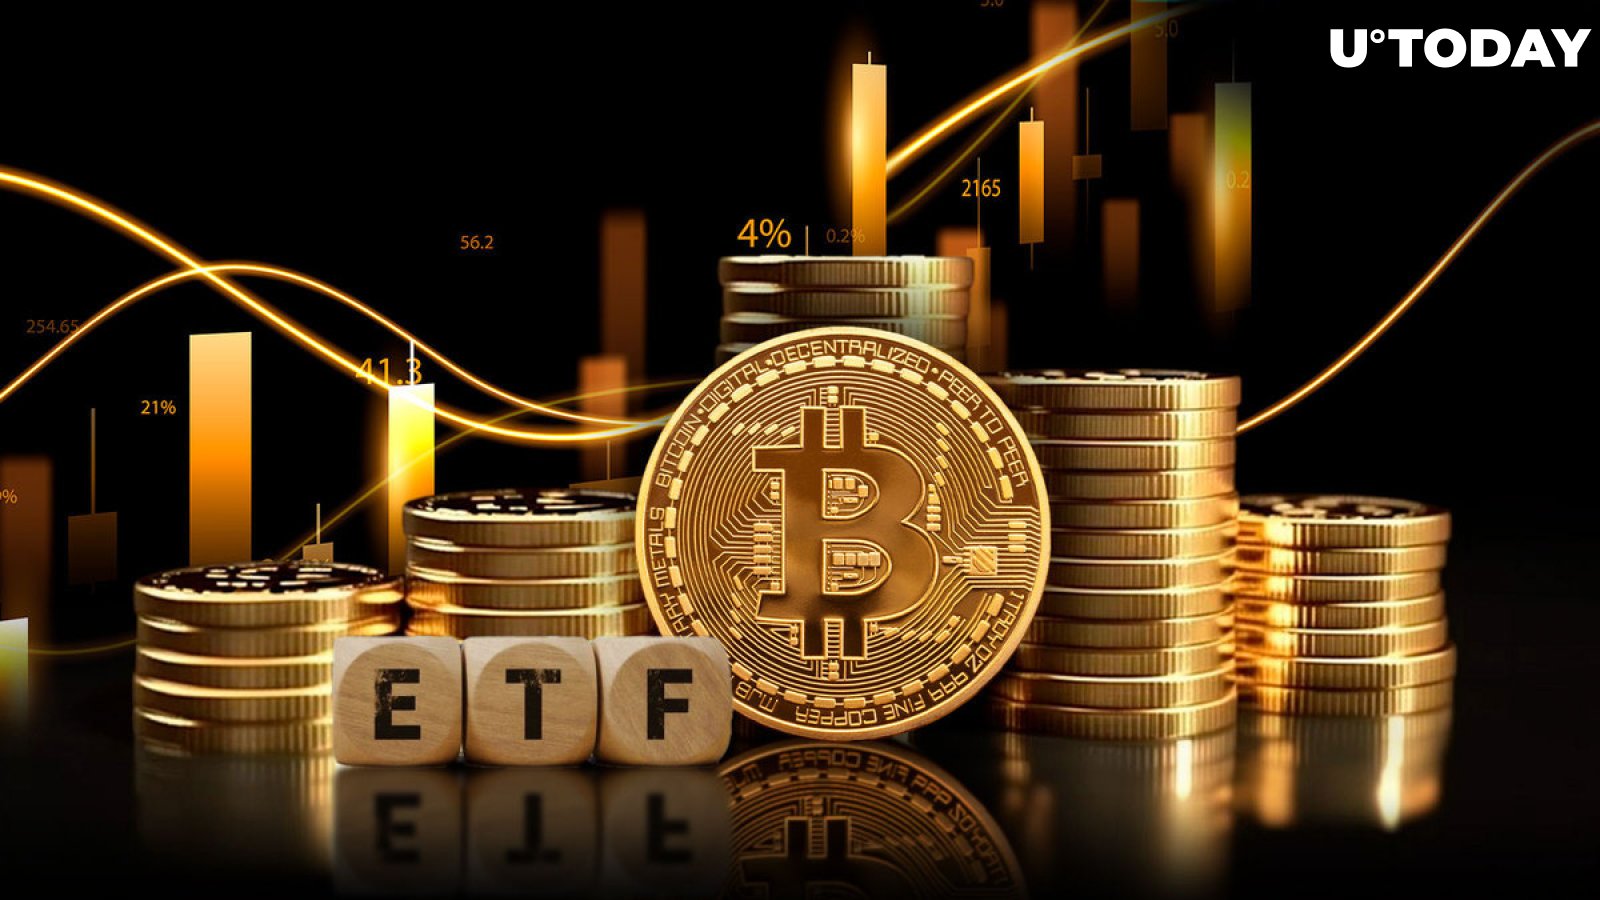 Spot Bitcoin ETFs Break Record With $50 Billion Trading Volume